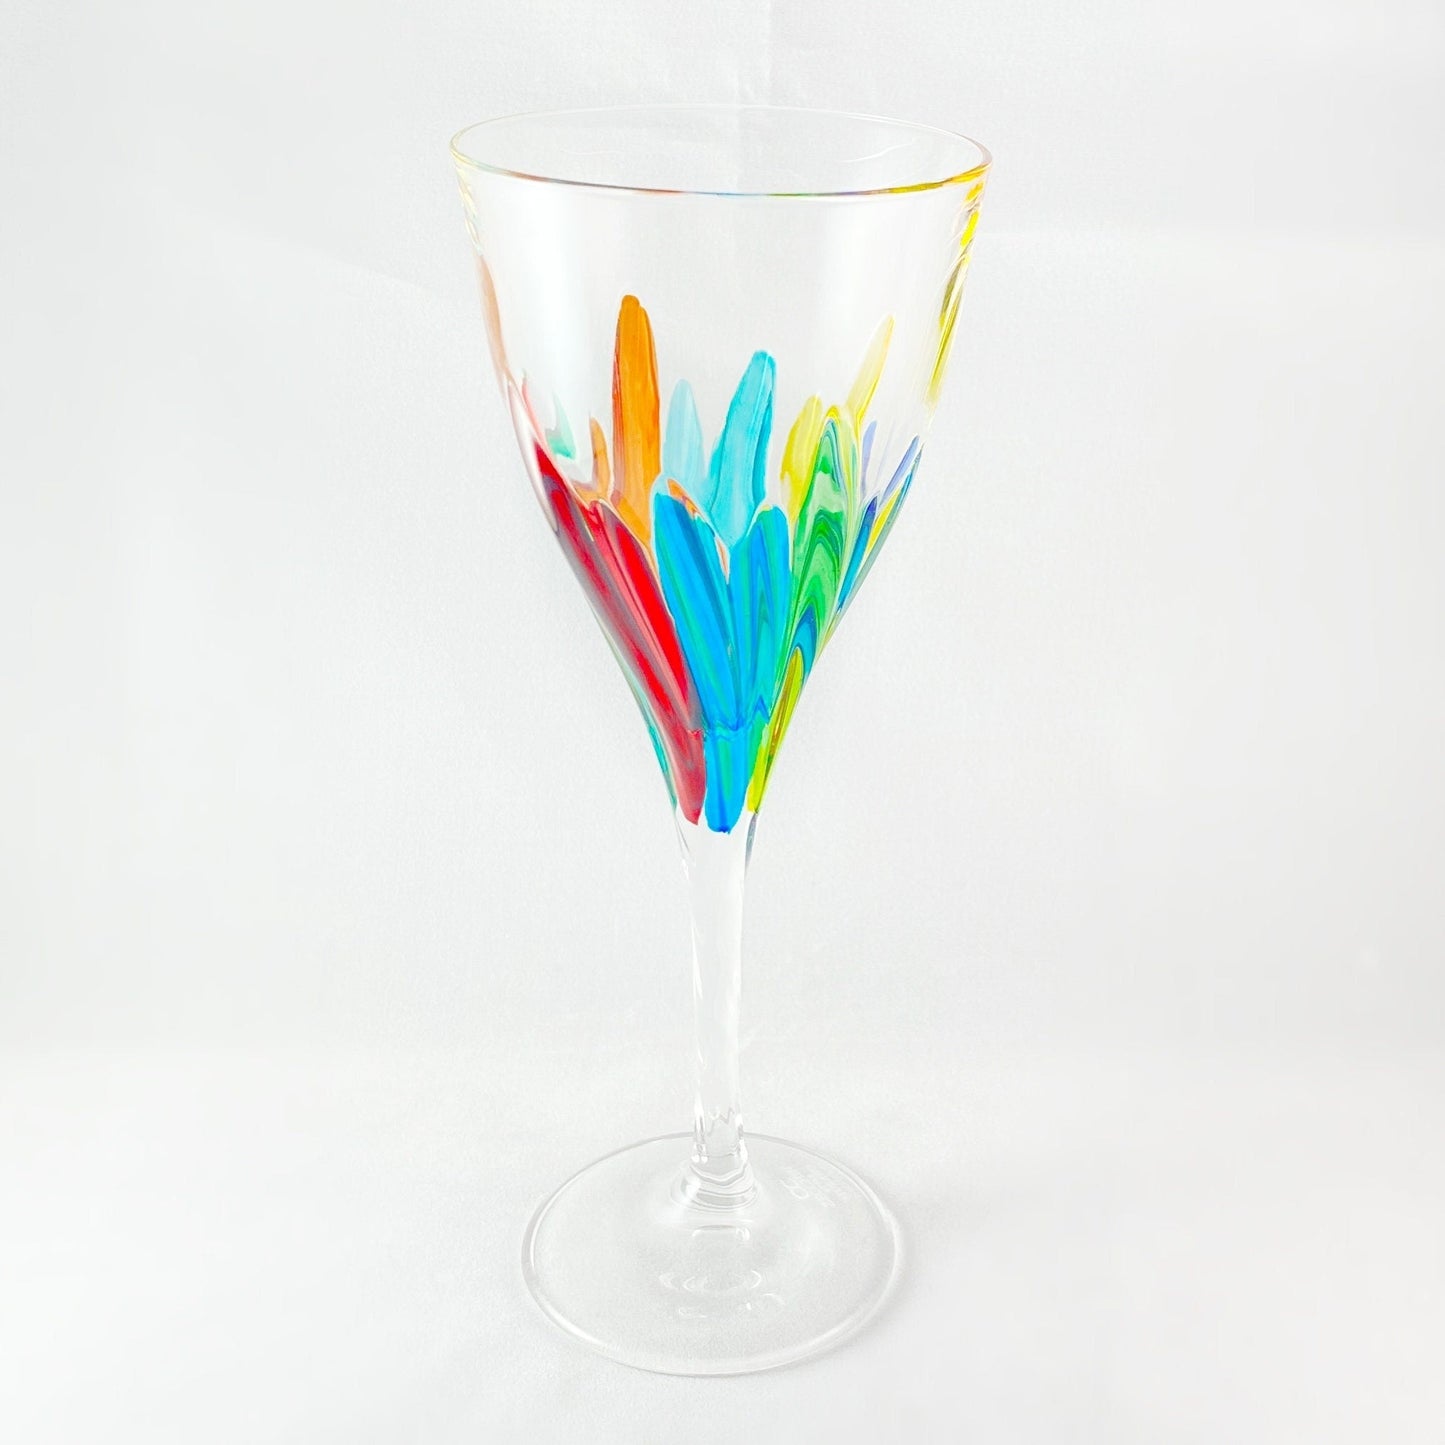 Fluente Venetian Glass Wine Glass - Handmade in Italy, Colorful Murano Glass